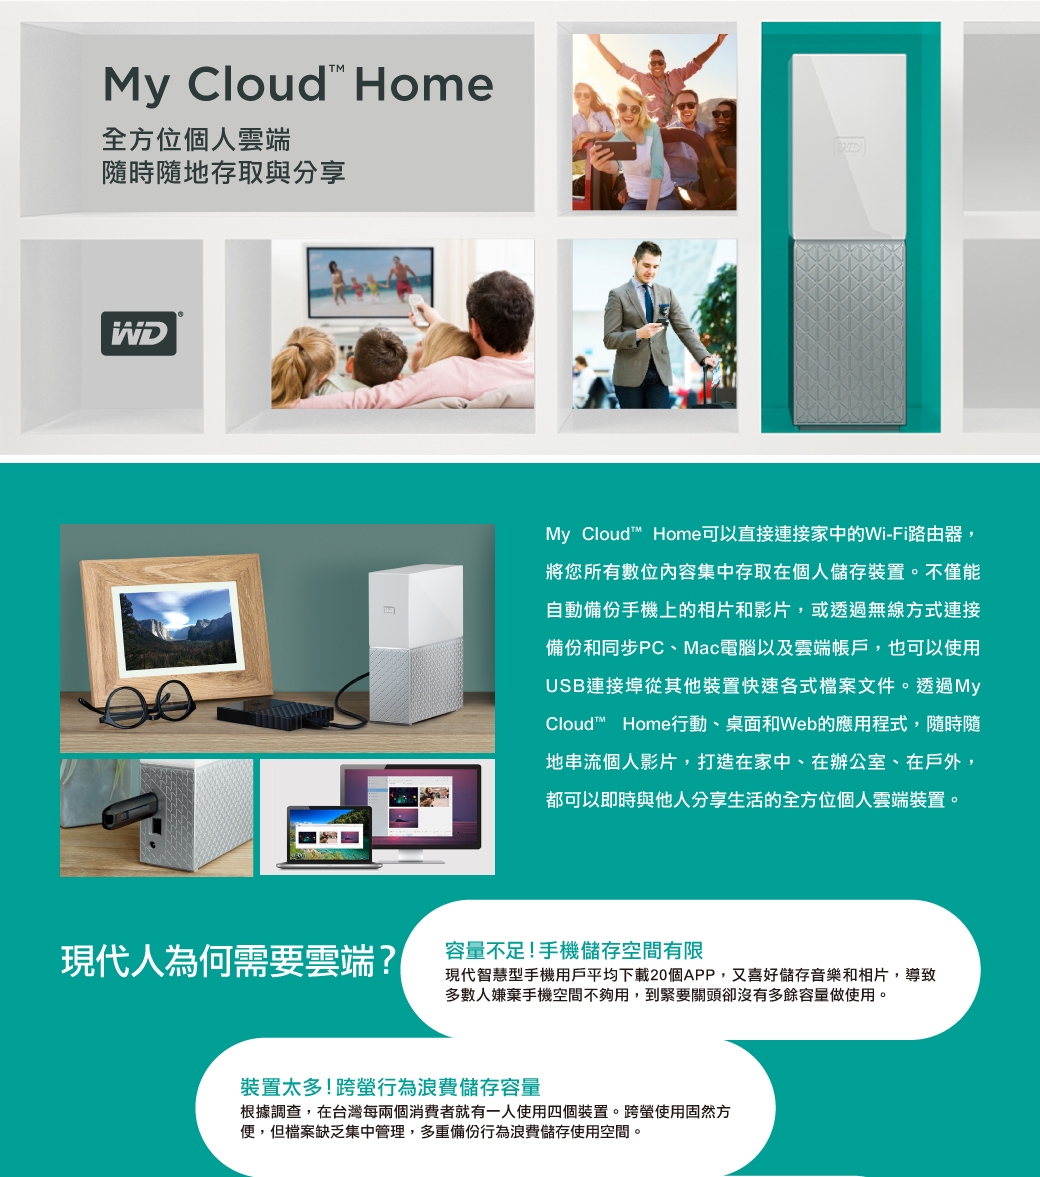 WD My Cloud Home Duo 16TB(8TBx2)3.5吋雲端儲存系統